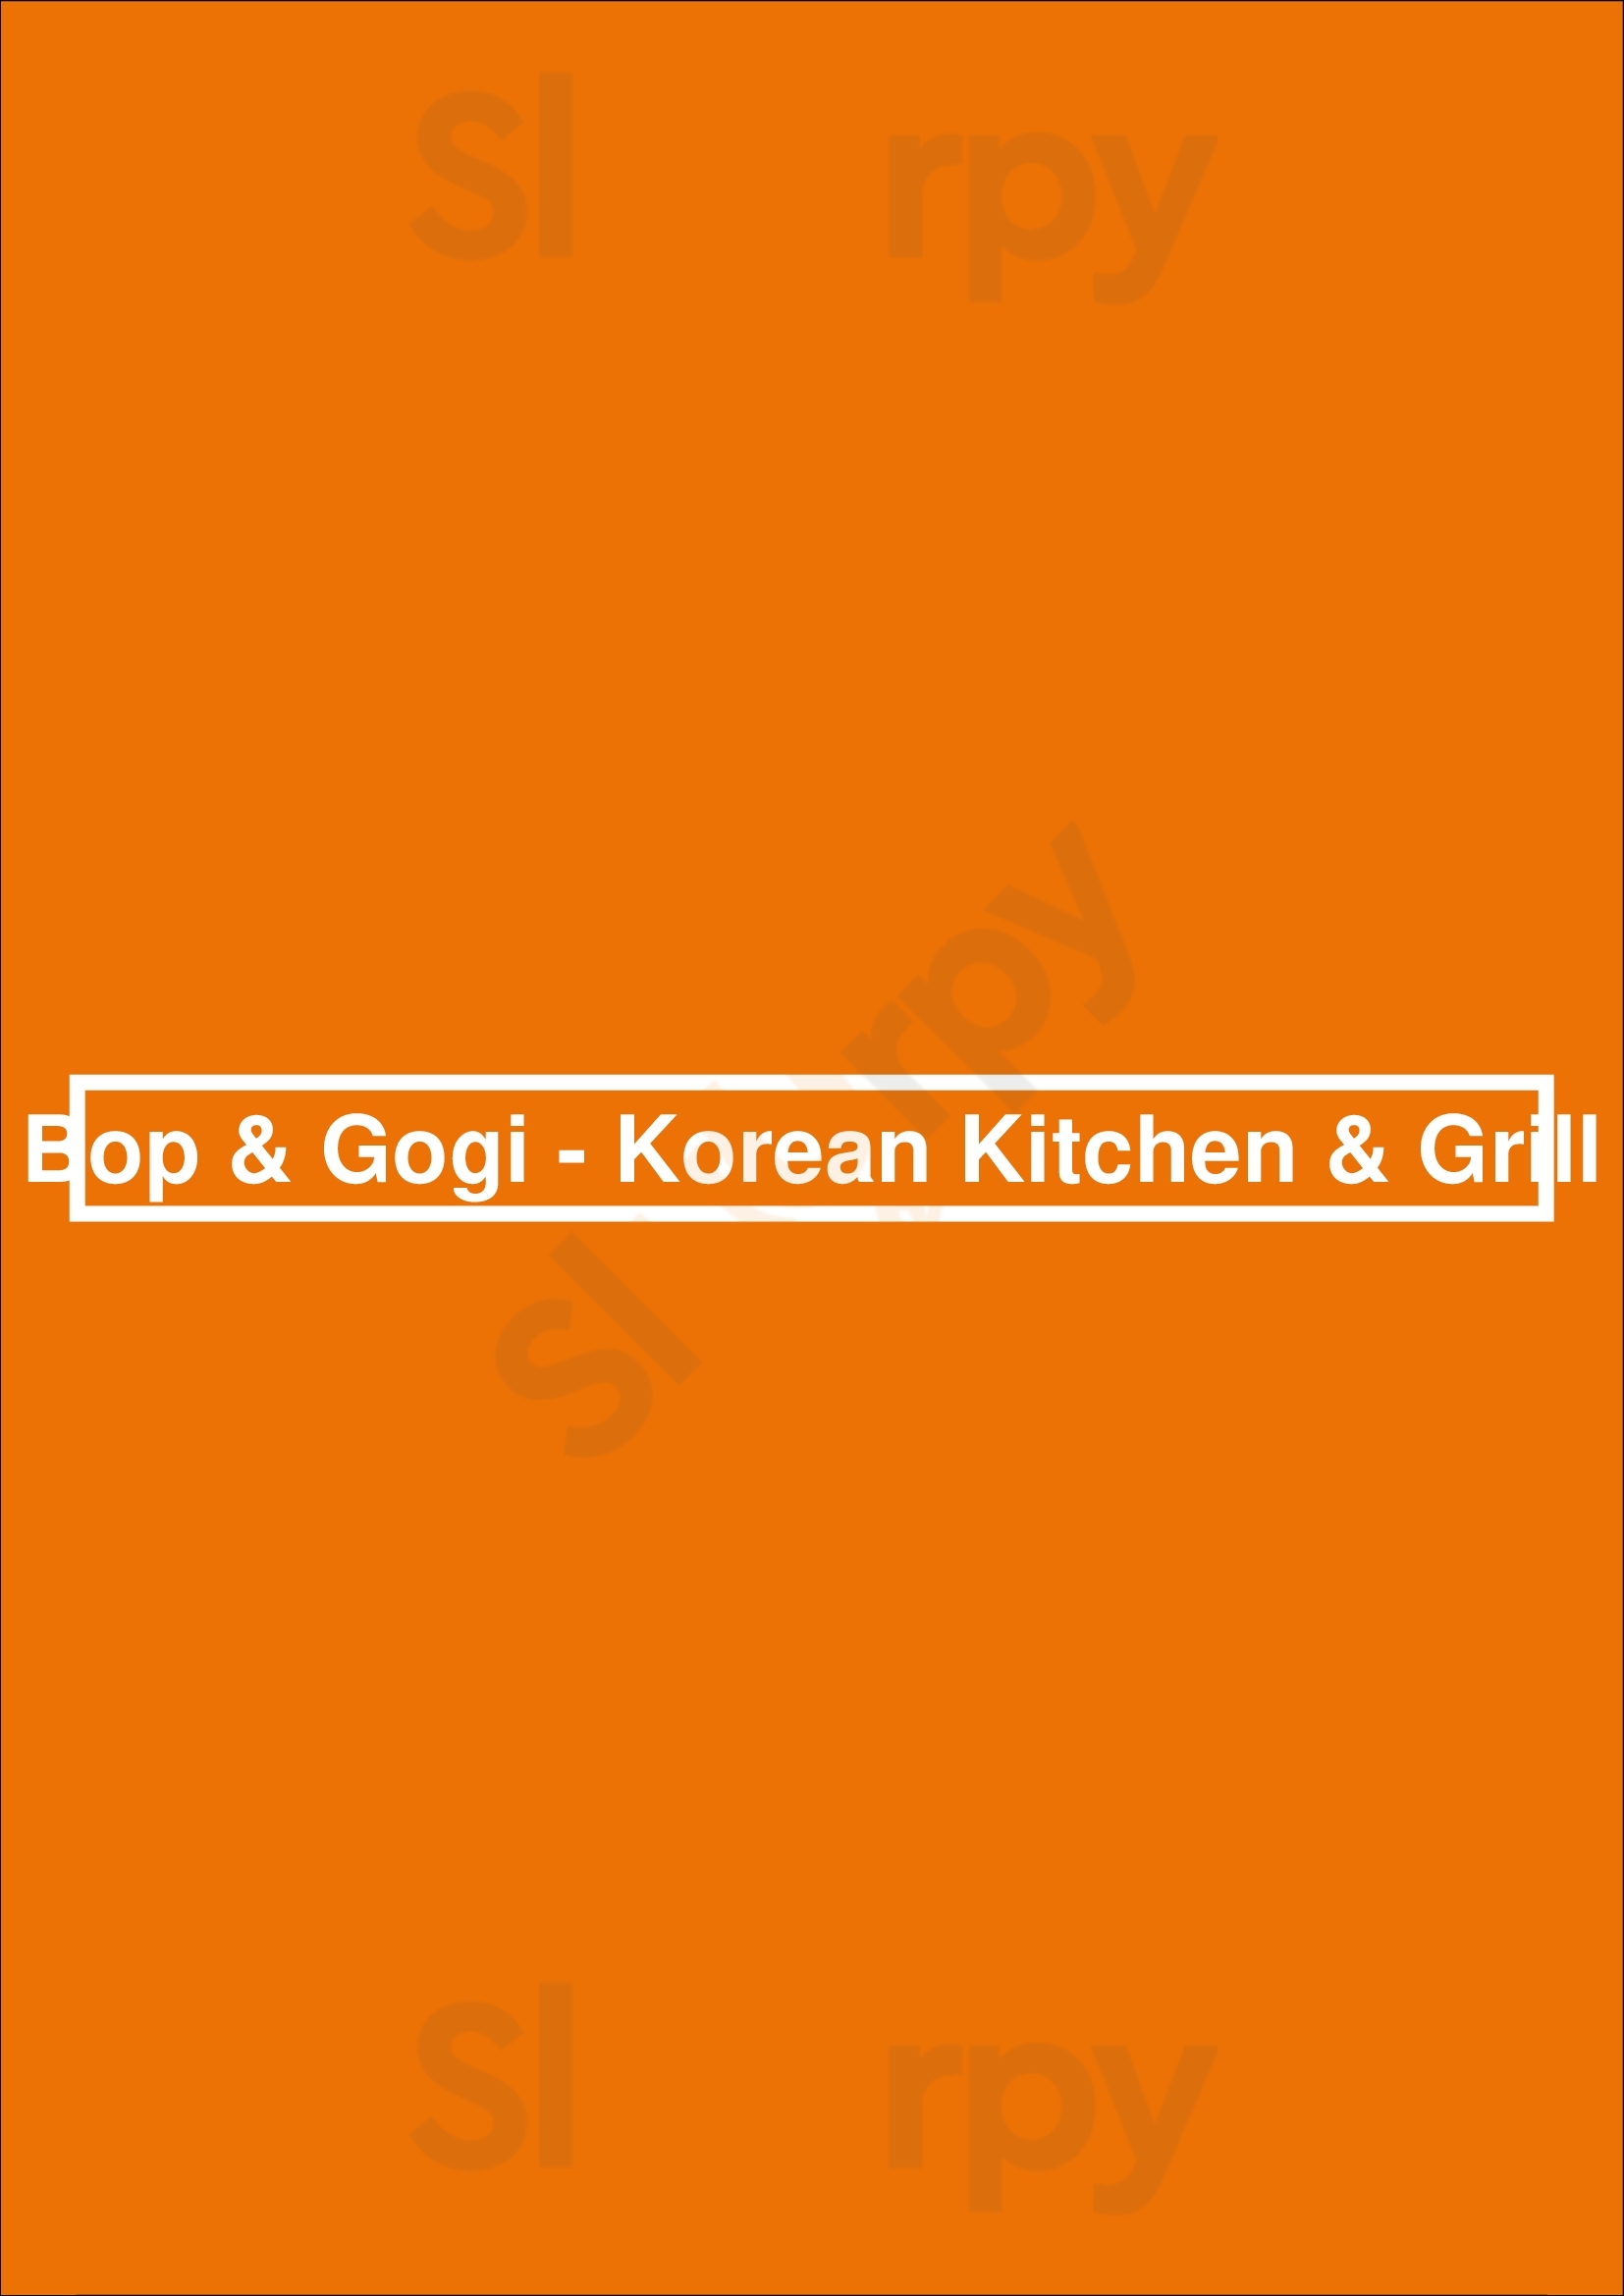 Bop & Gogi - Korean Kitchen & Grill Centennial Menu - 1